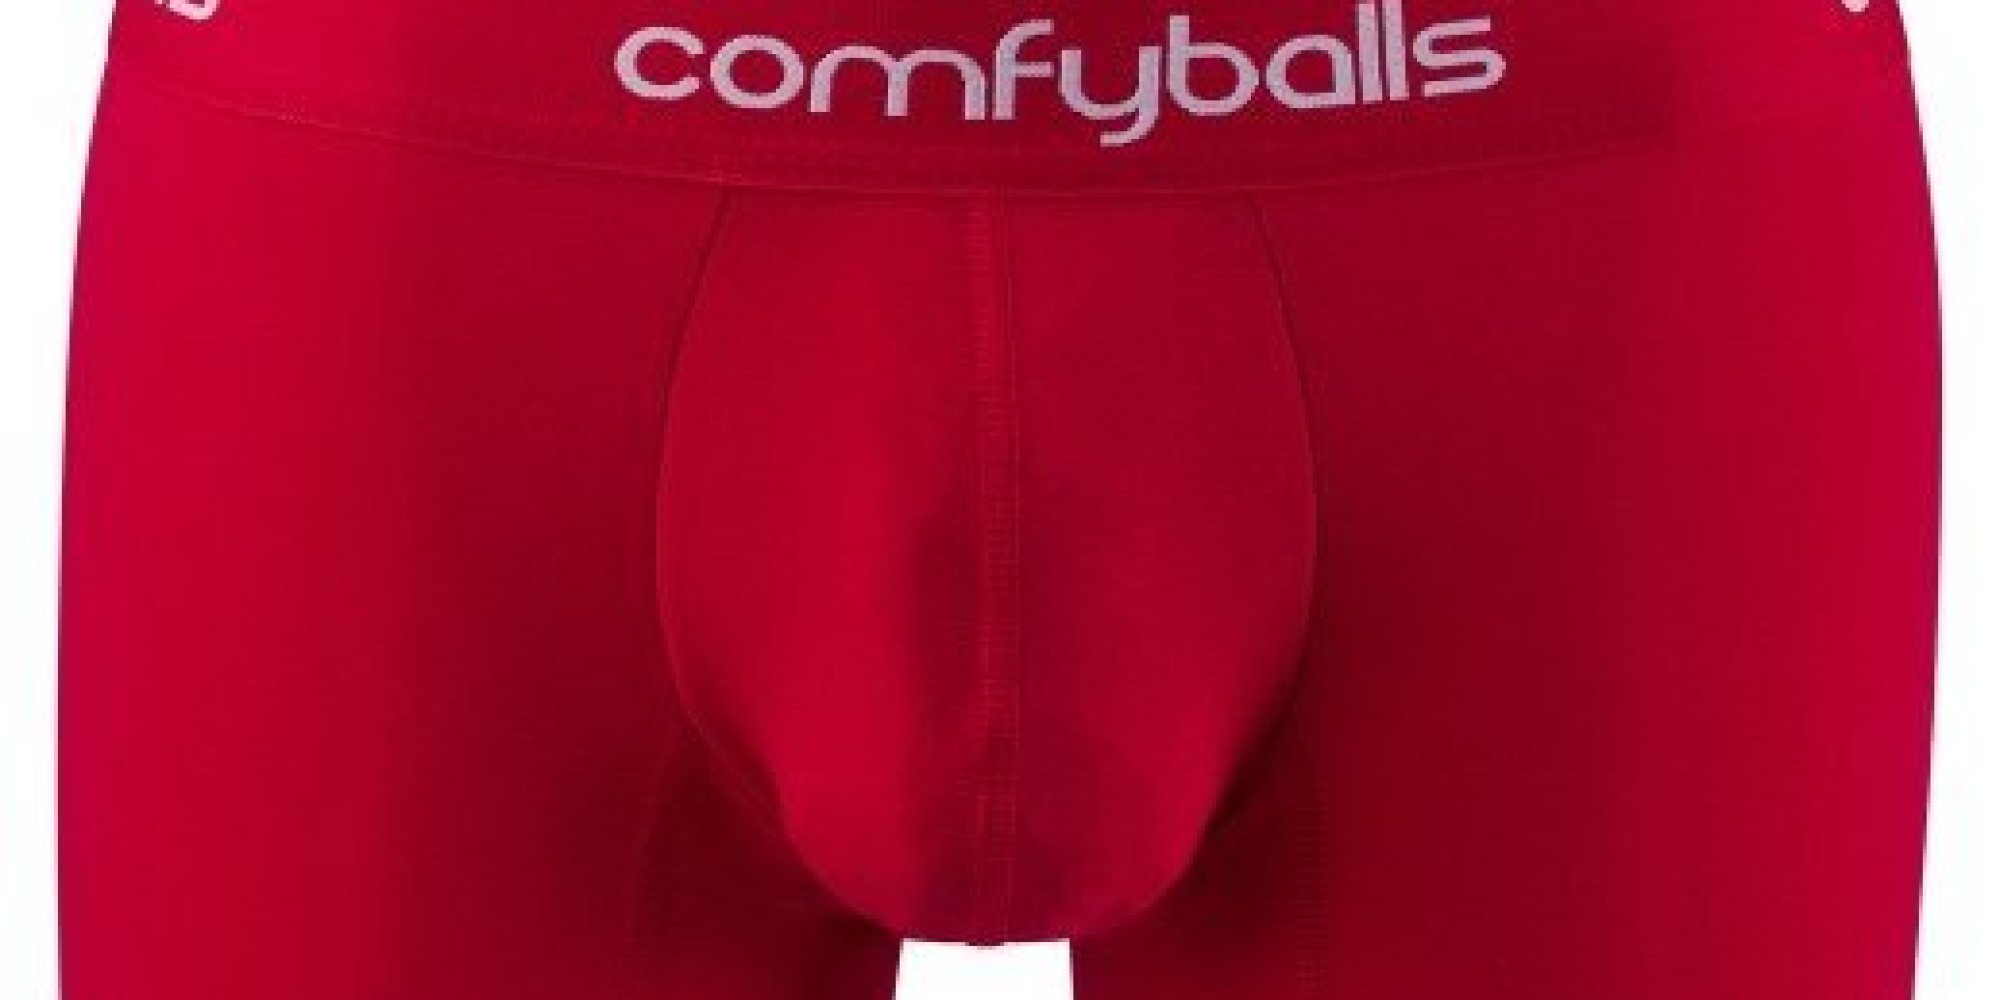 Comfyballs Underwear Denied Trademark Because Balls Huffpost 